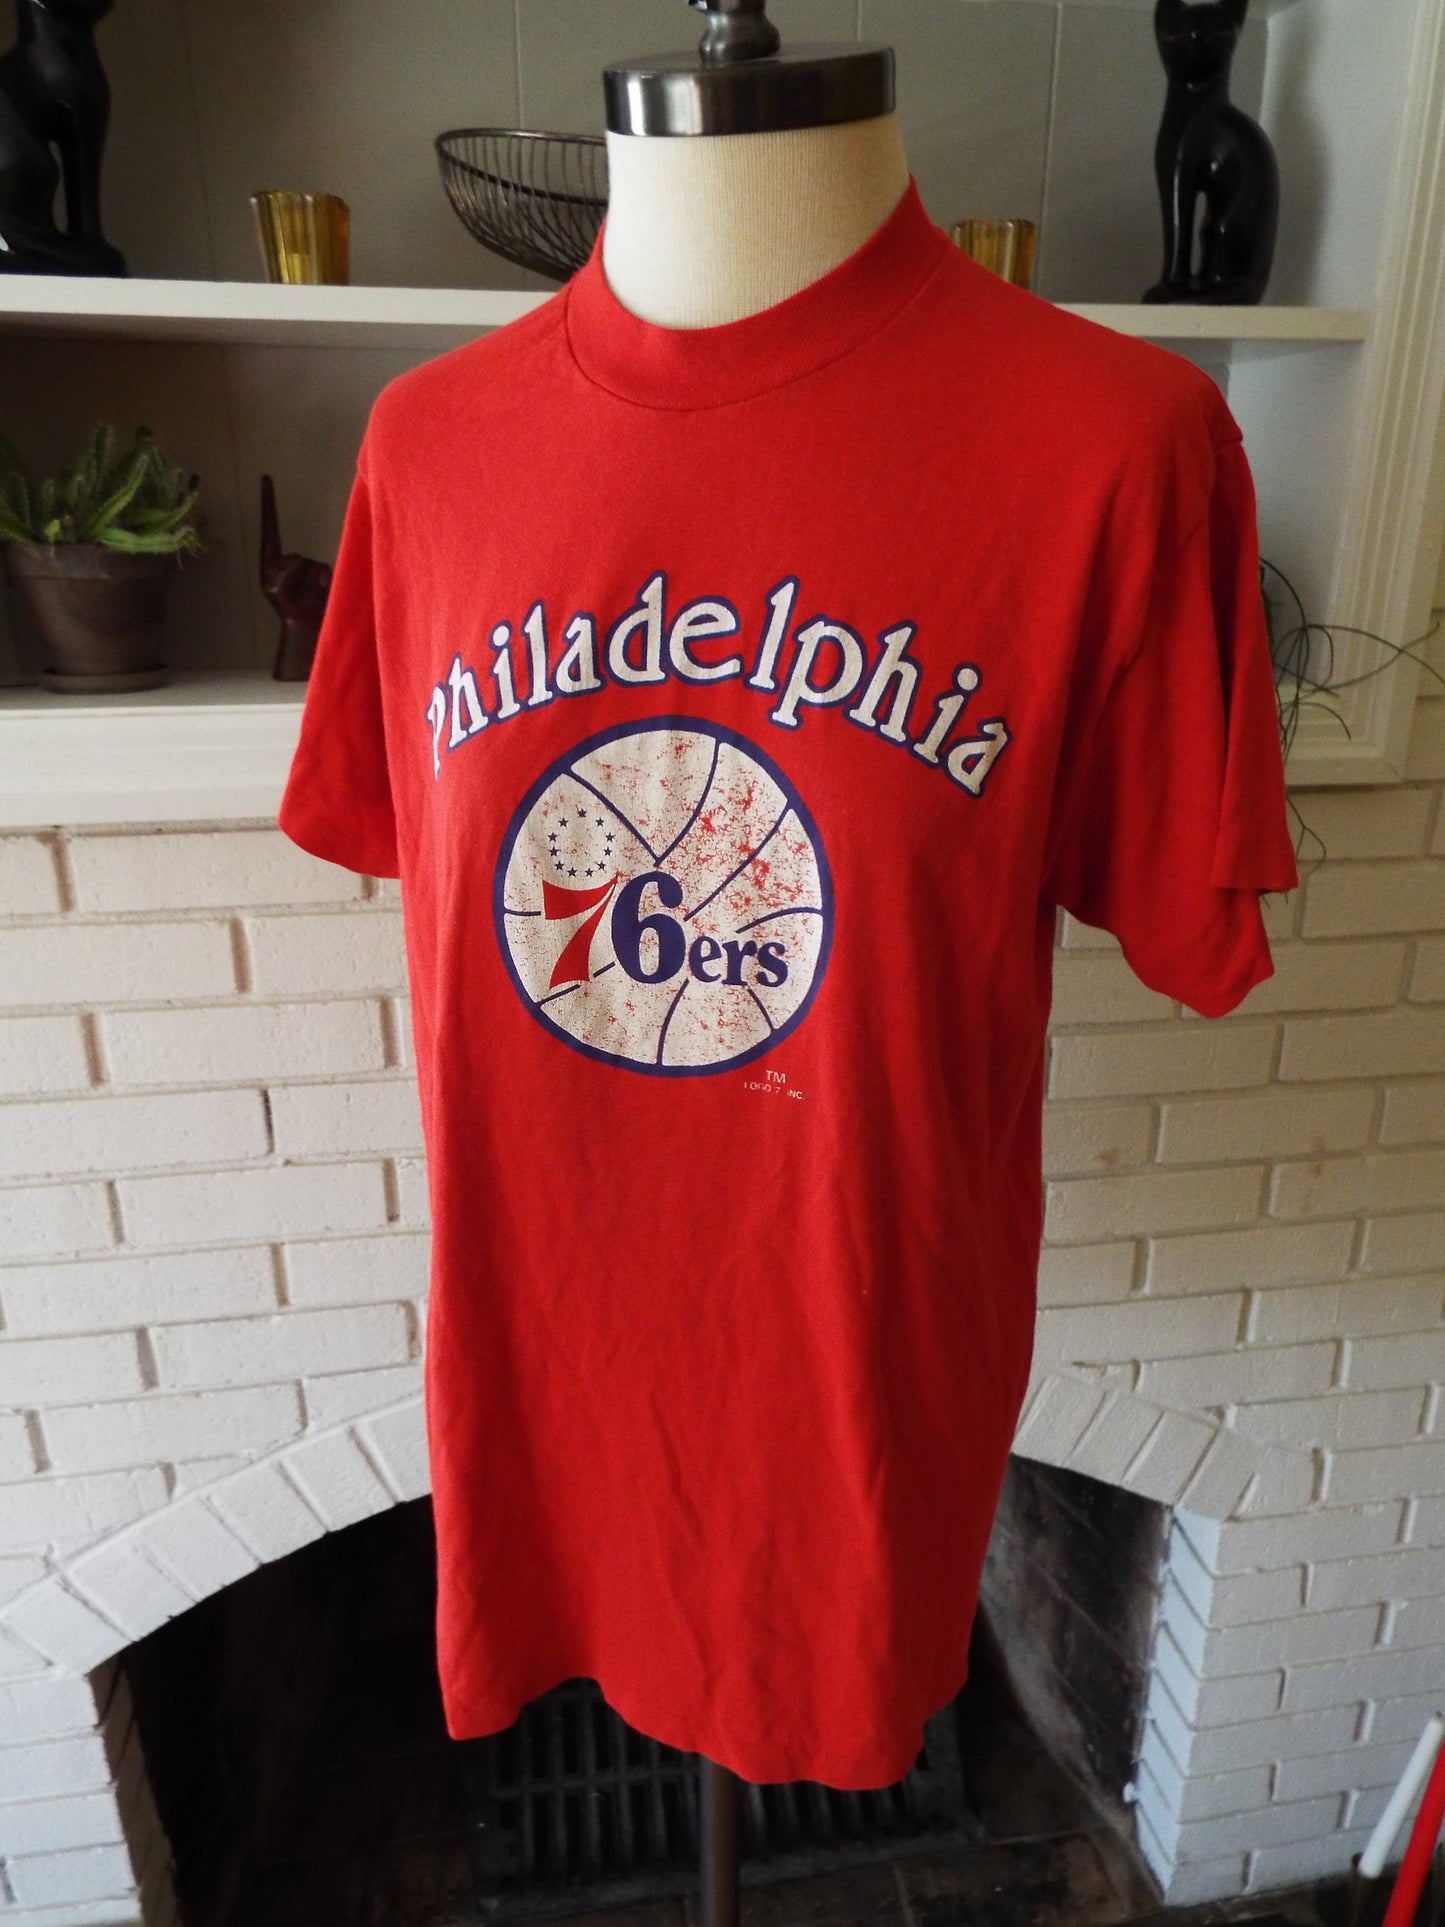 RetroGetgo Vintage Philadelphia Phillies T Shirt